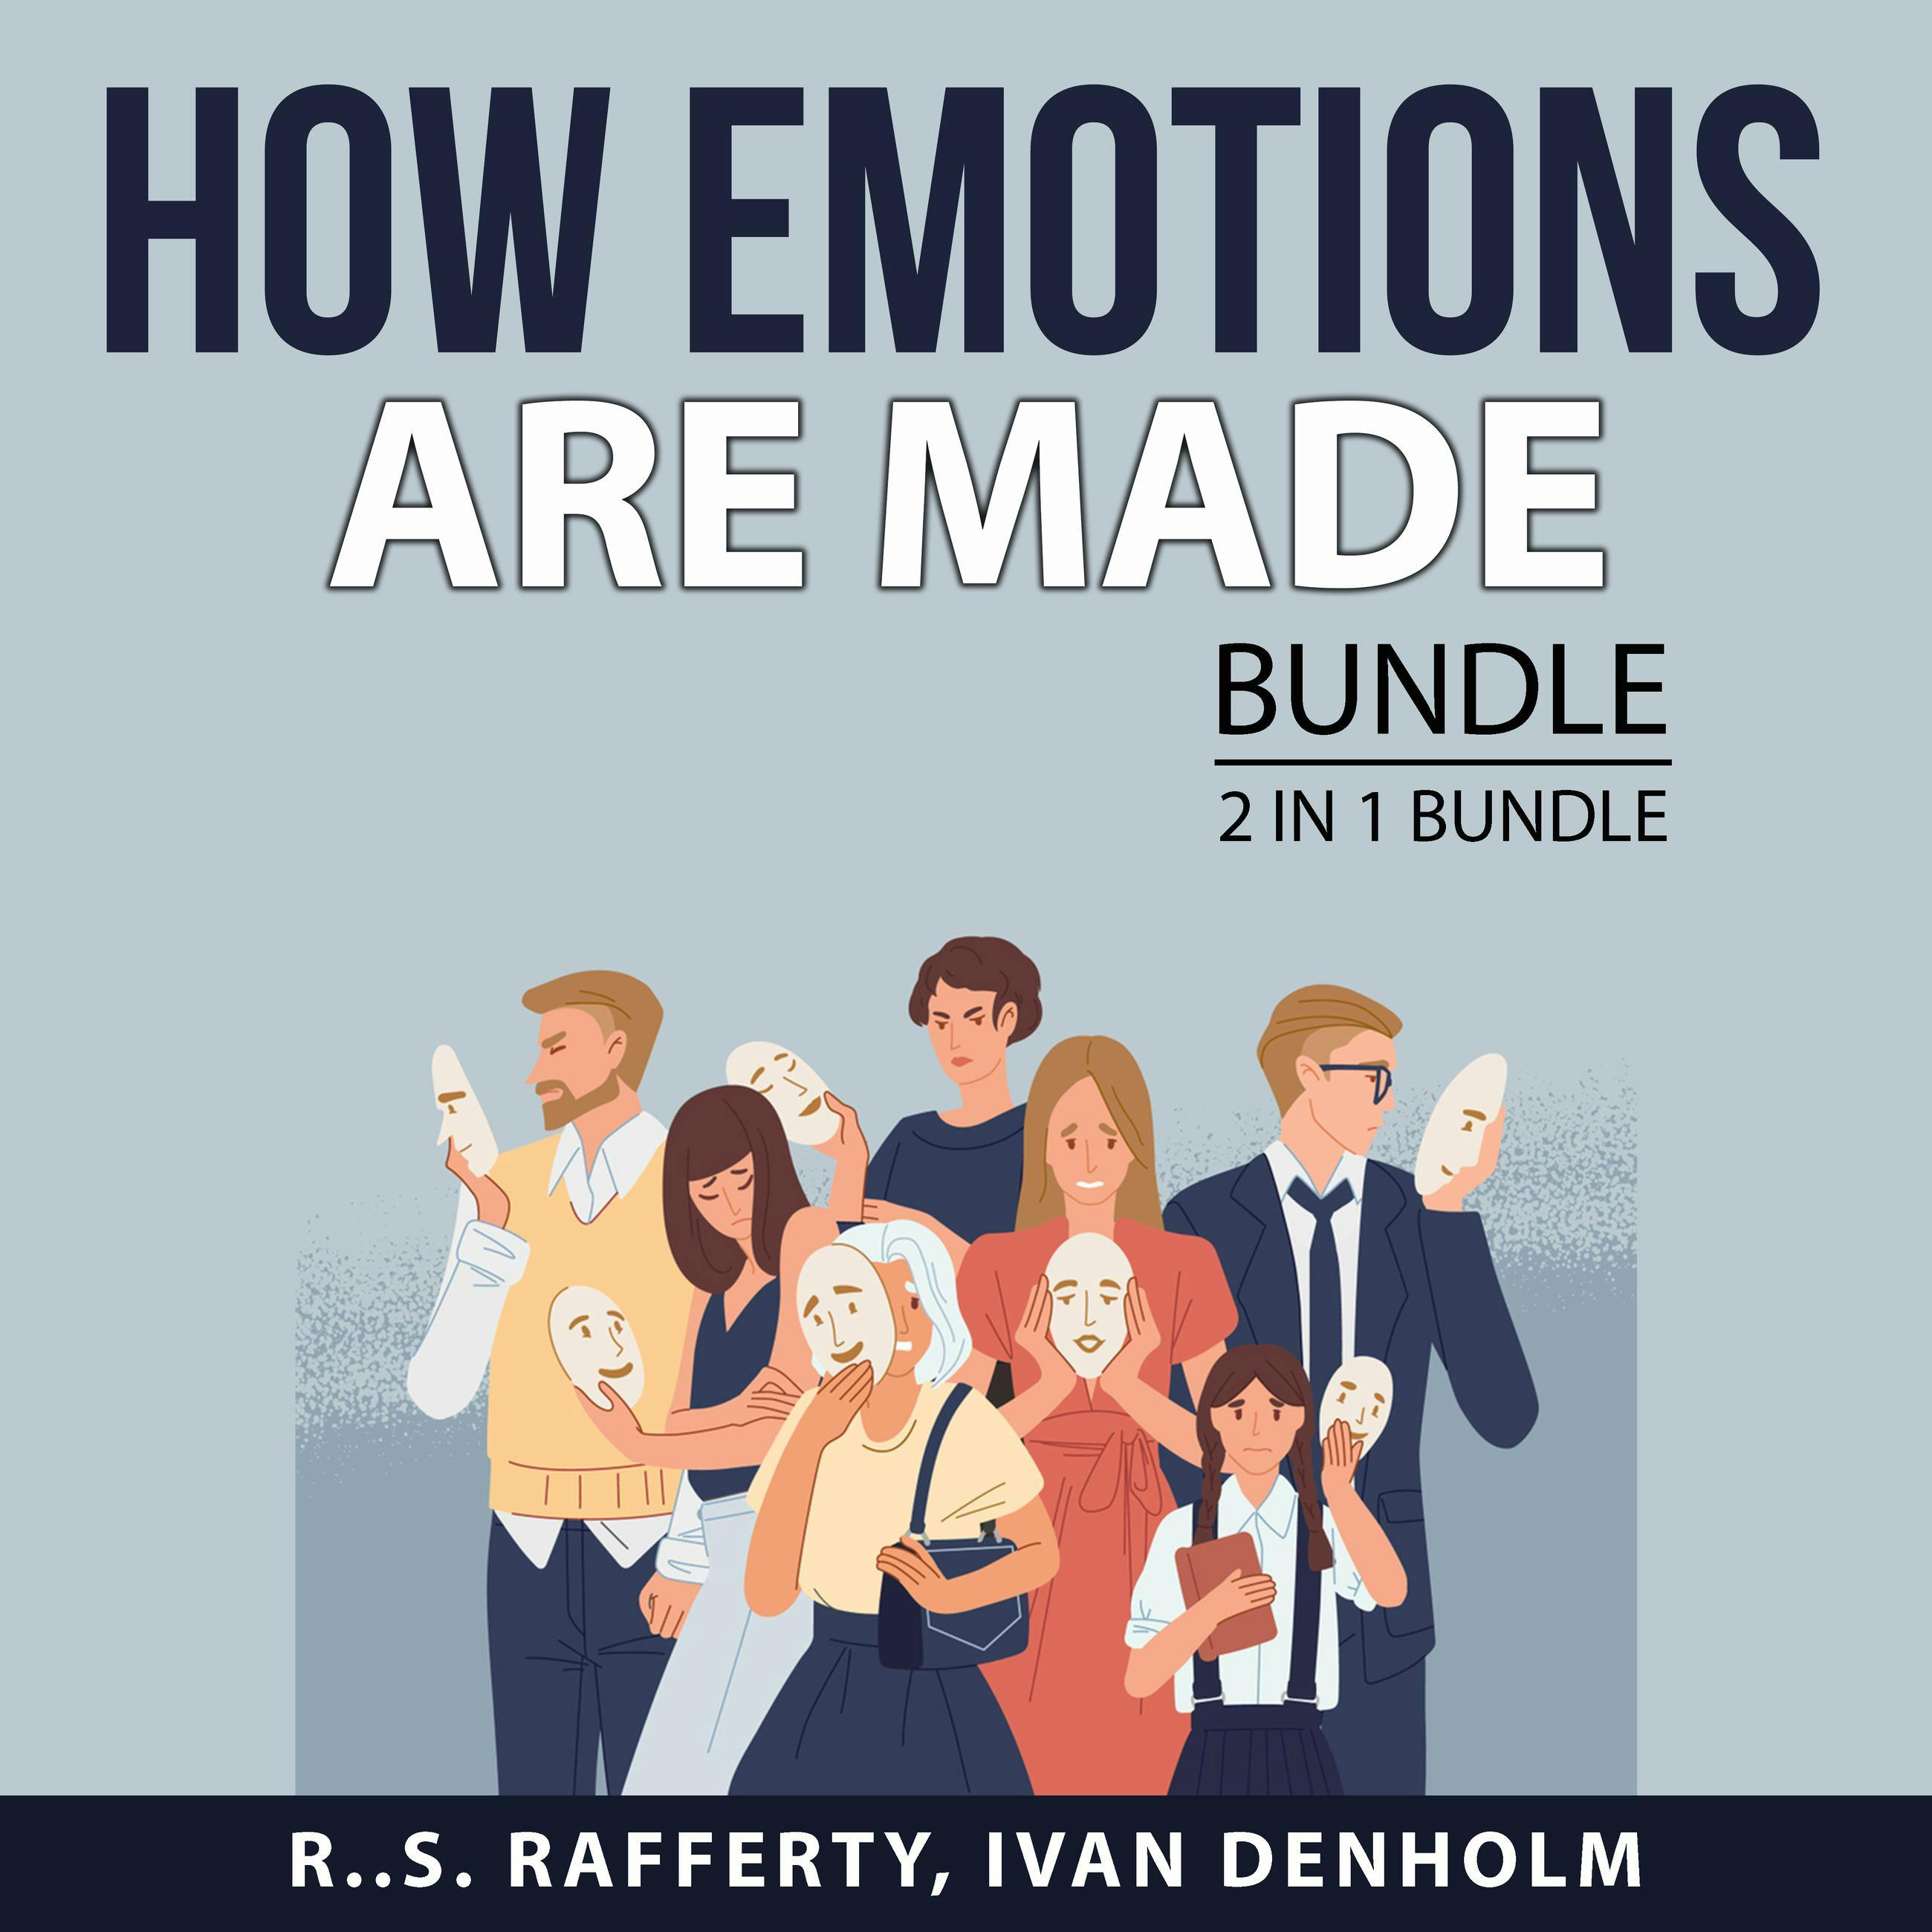 How Emotions Are Made Bundle, 2 in 1 Bundle: Your Feelings and Emotions and Master Your Feelings - R..S. Rafferty, Ivan Denholm